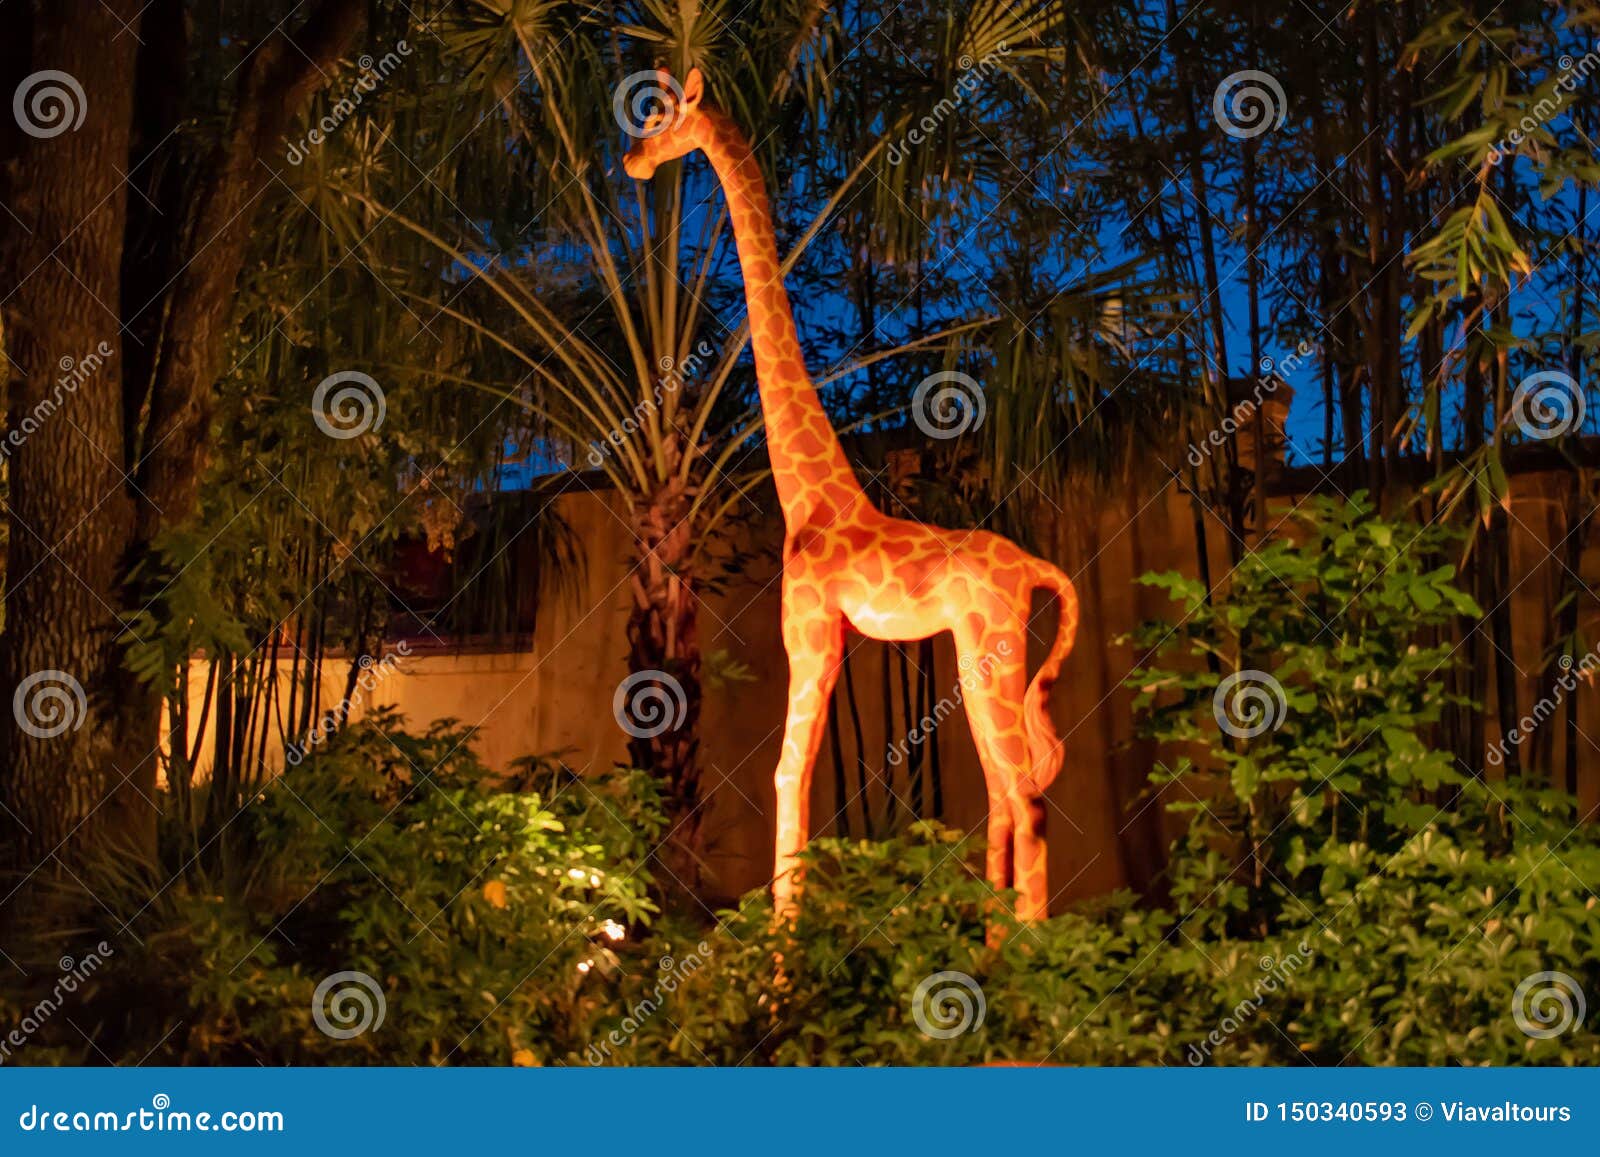 Colorful Giraffe in Animal Kingdom at Walt Disney World Area. Editorial  Stock Photo - Image of area, goofy: 150340593